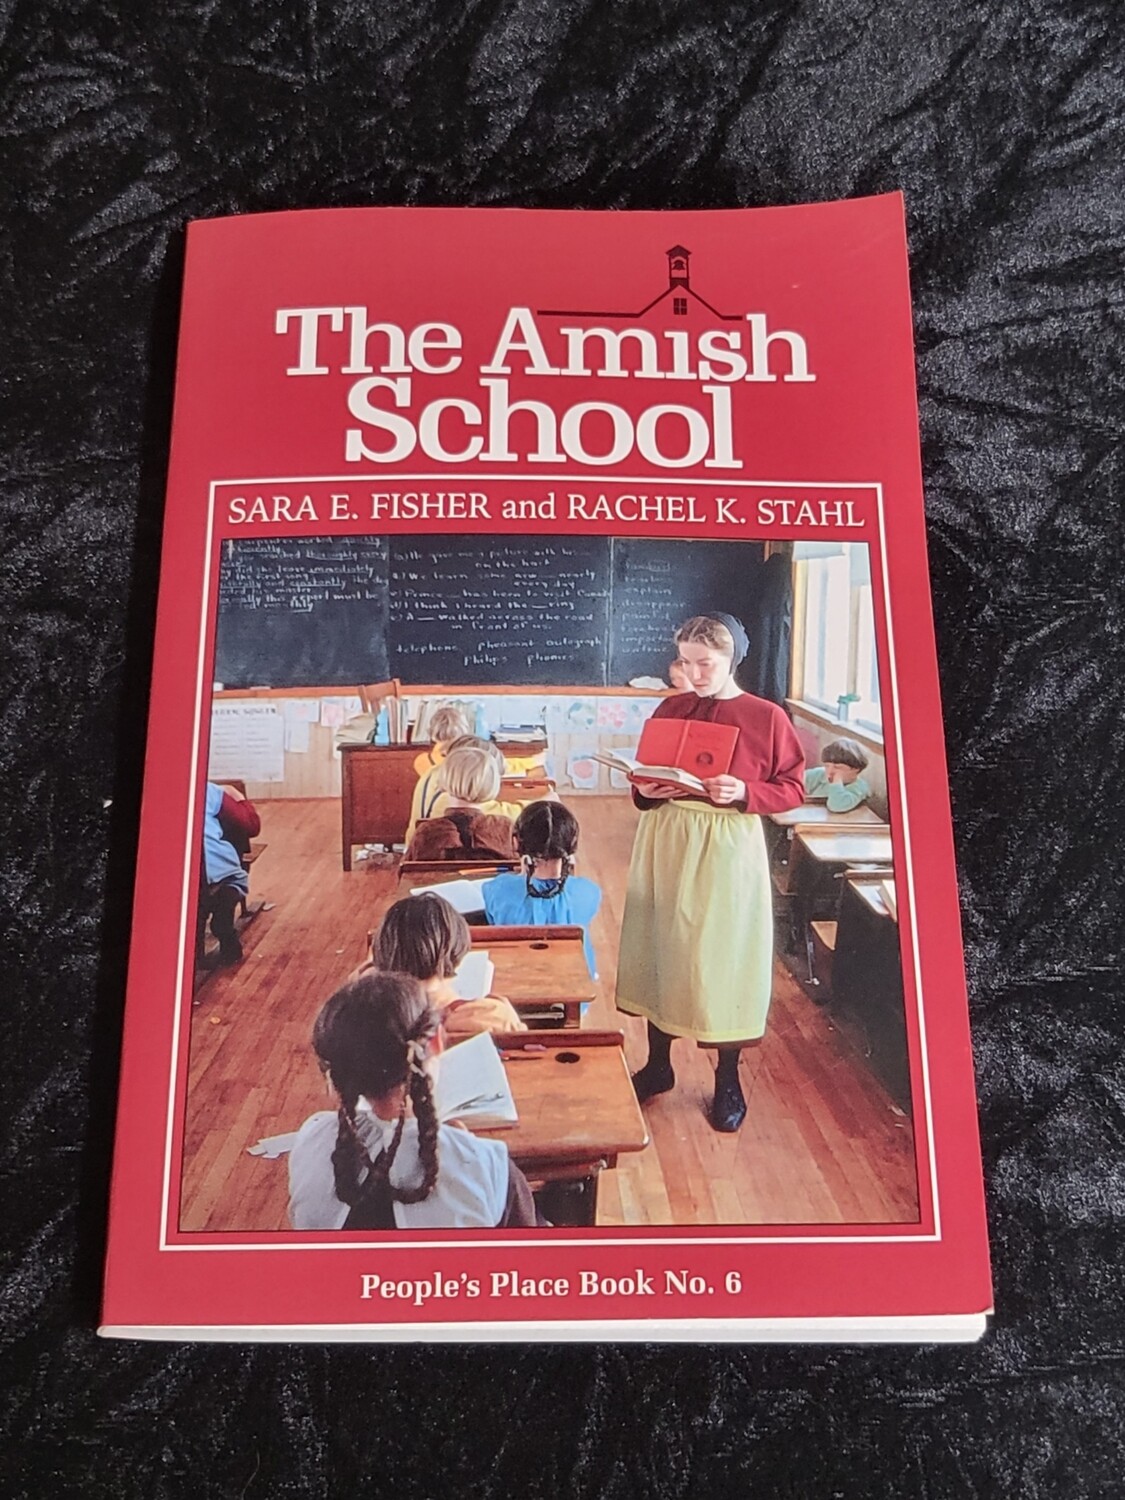 The Amish School